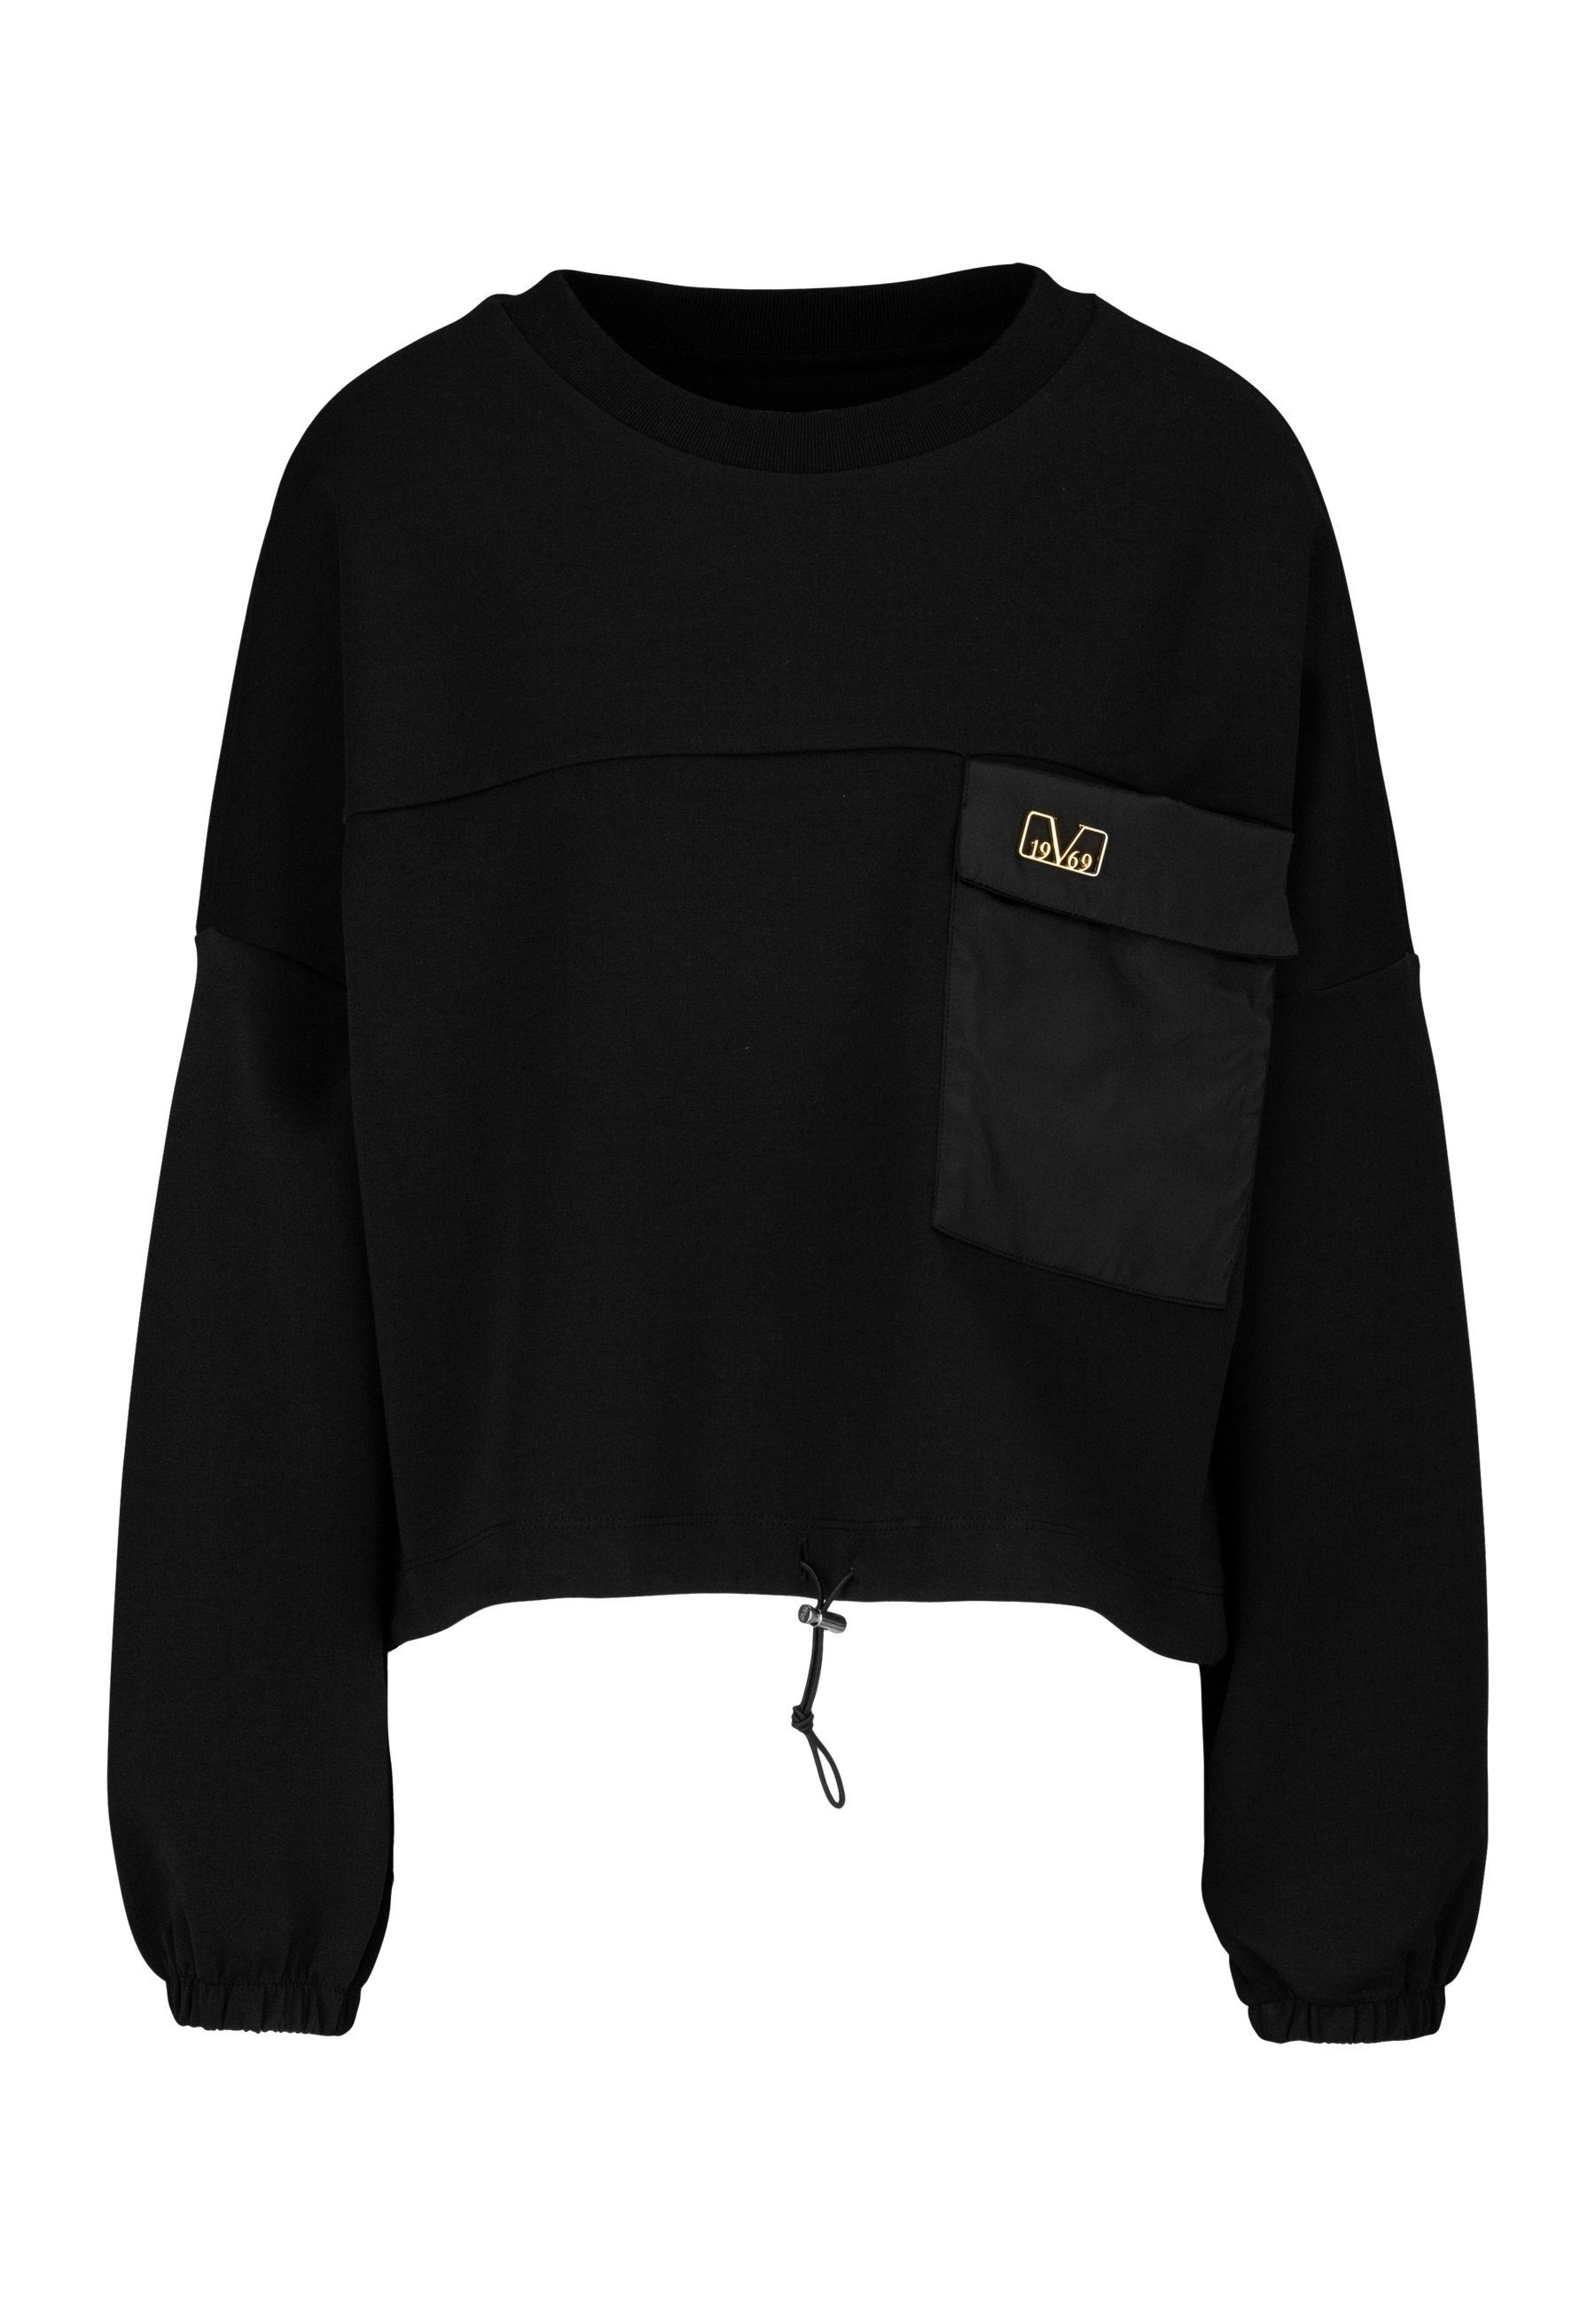 ITALIA 19V69 Sweatshirt Versace Tasche by Italia Pullover Sweatshirt mit